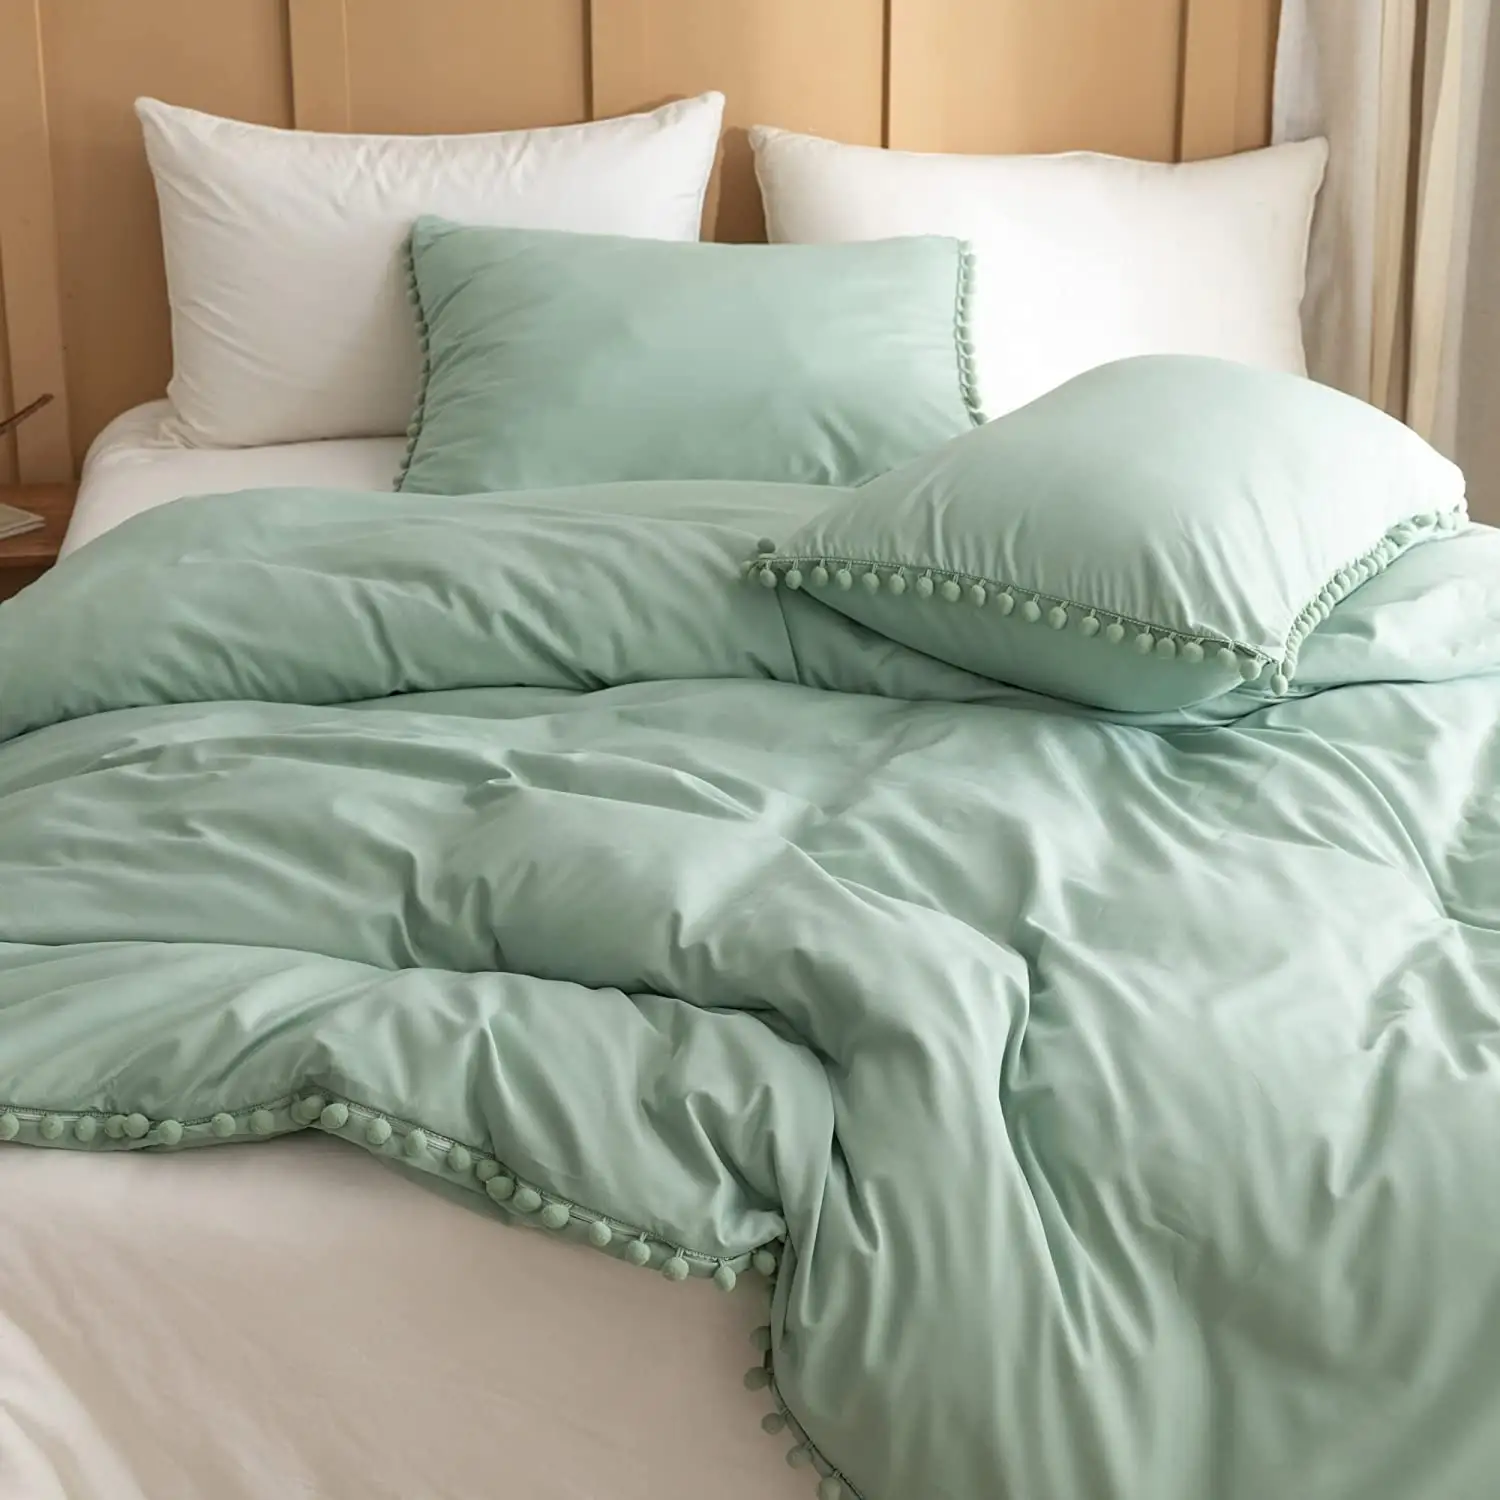 Pom Pom Duvet Cover Queen Size - Sage Green3 Piece Boho Bohemian Microfiber Bedding Comforter Cover Set